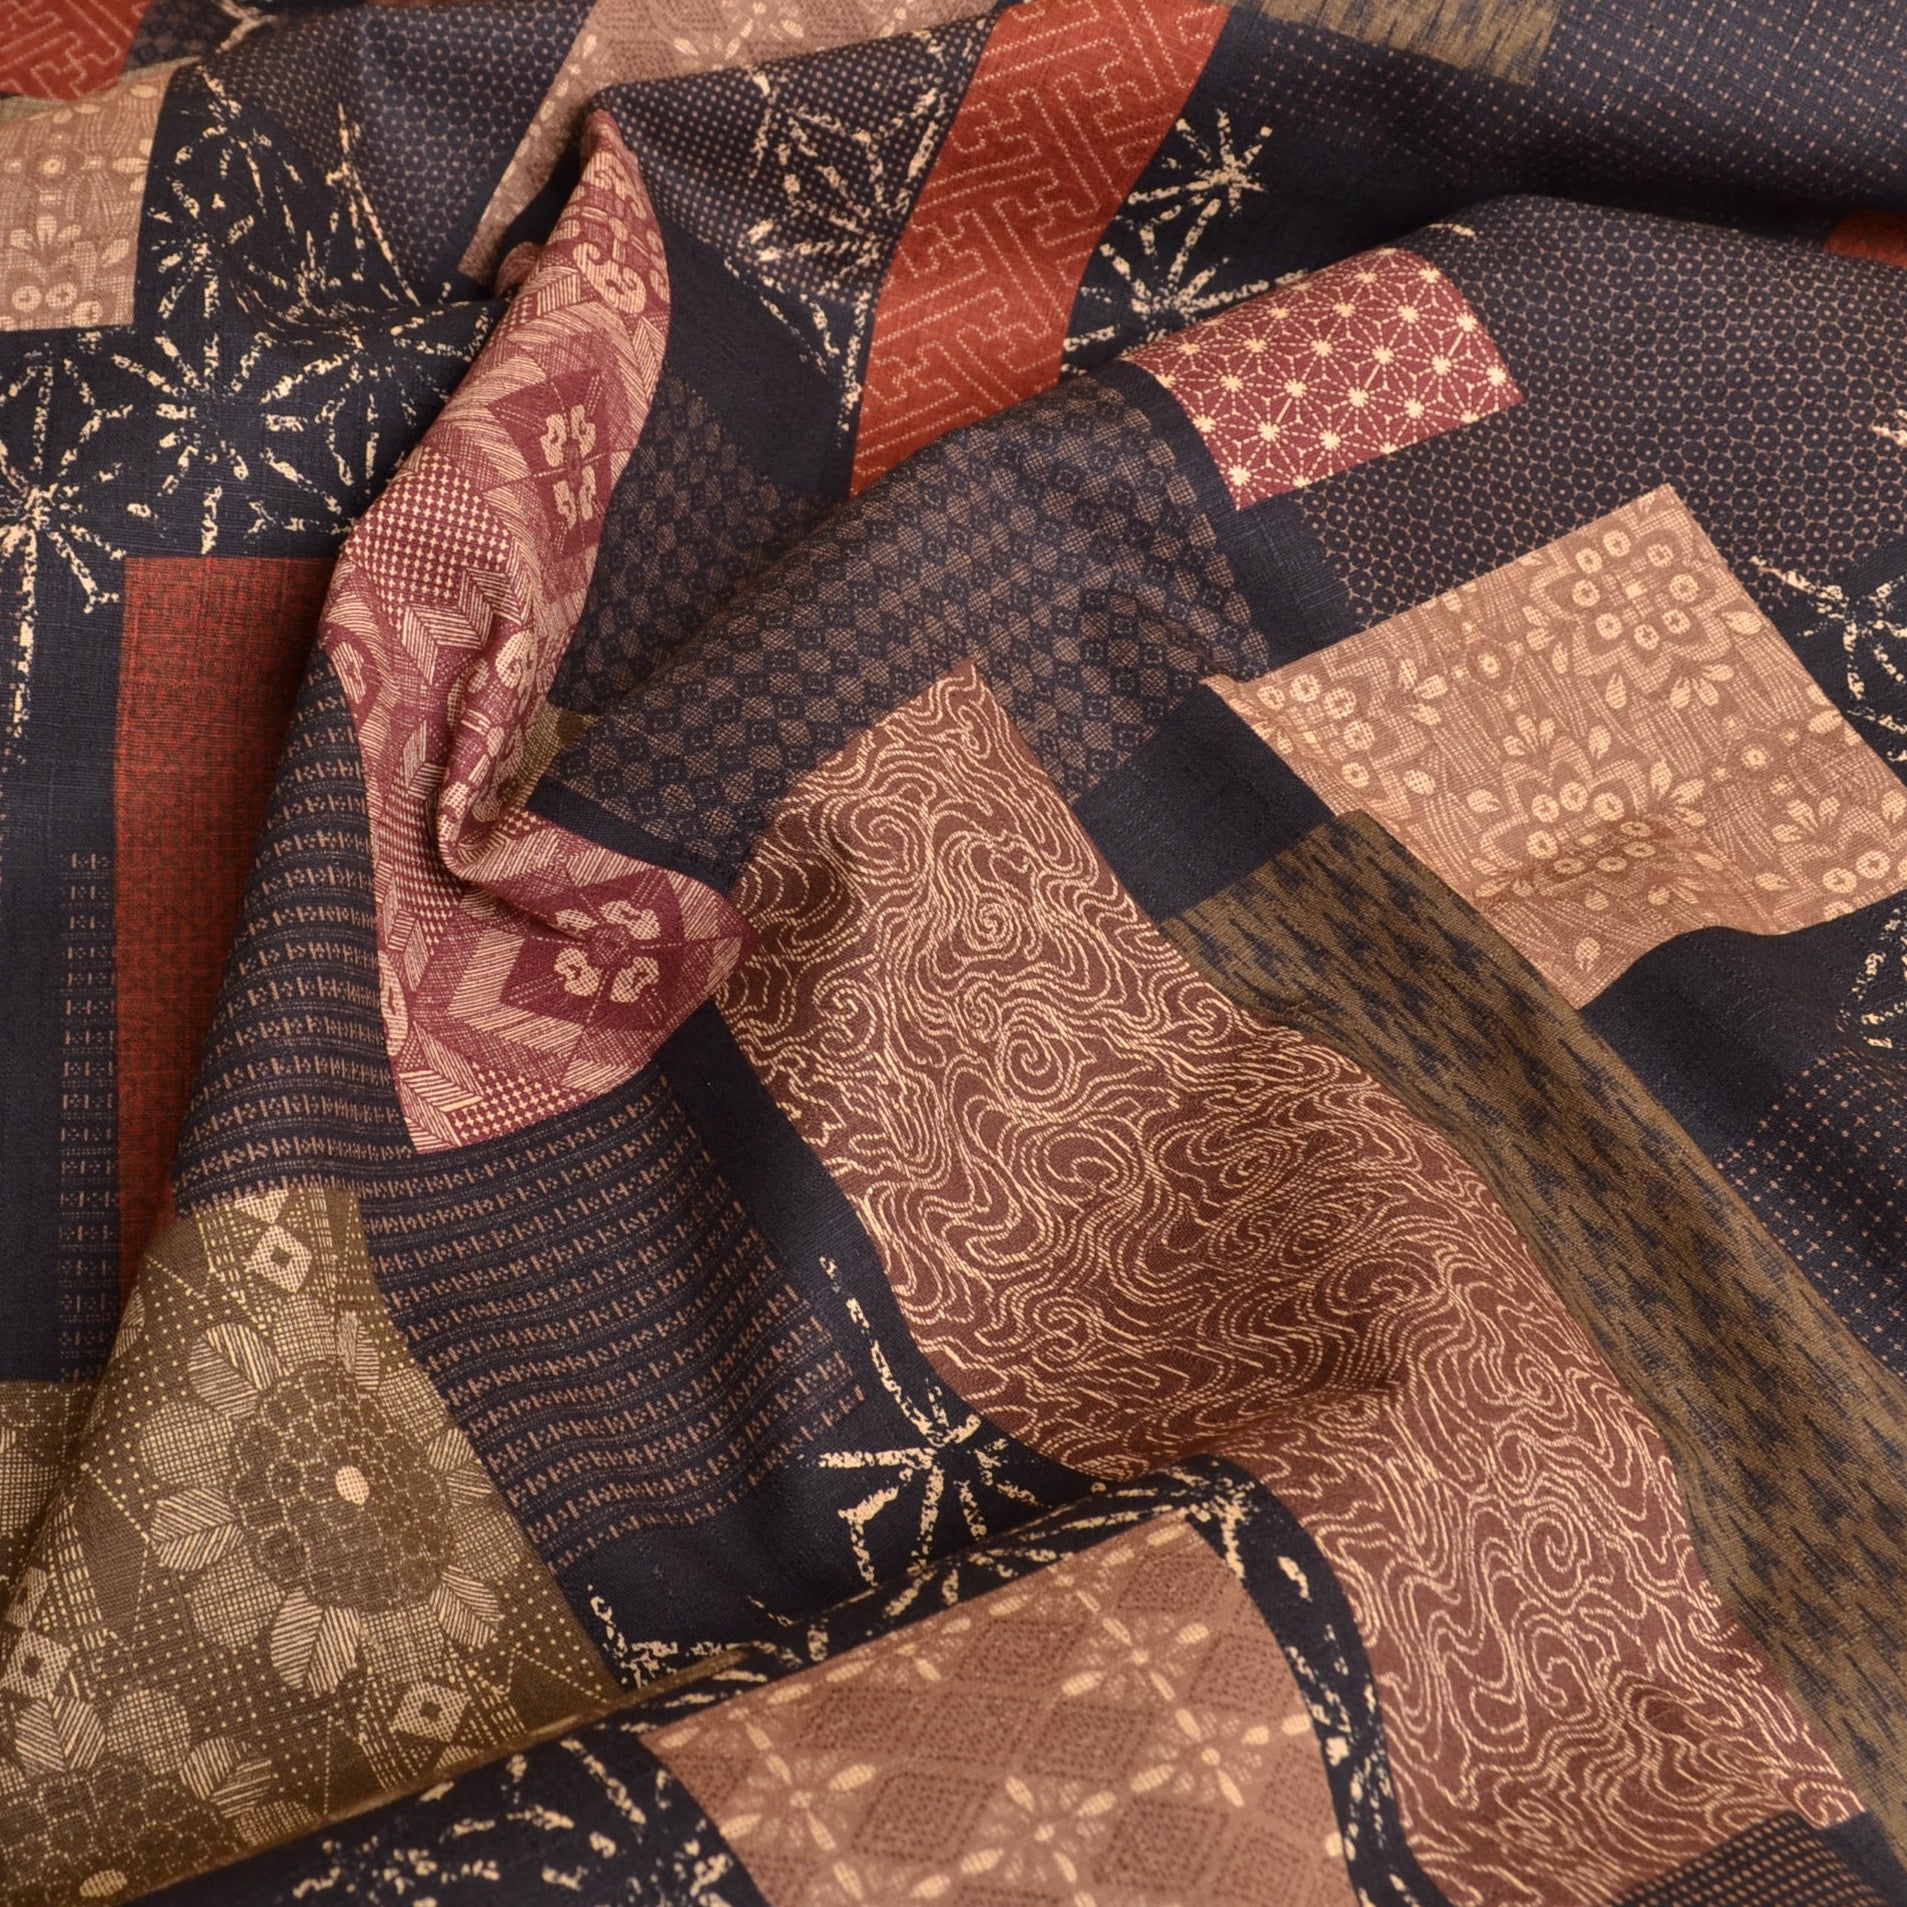 Cotton sewing fabric from Morikiku Japan